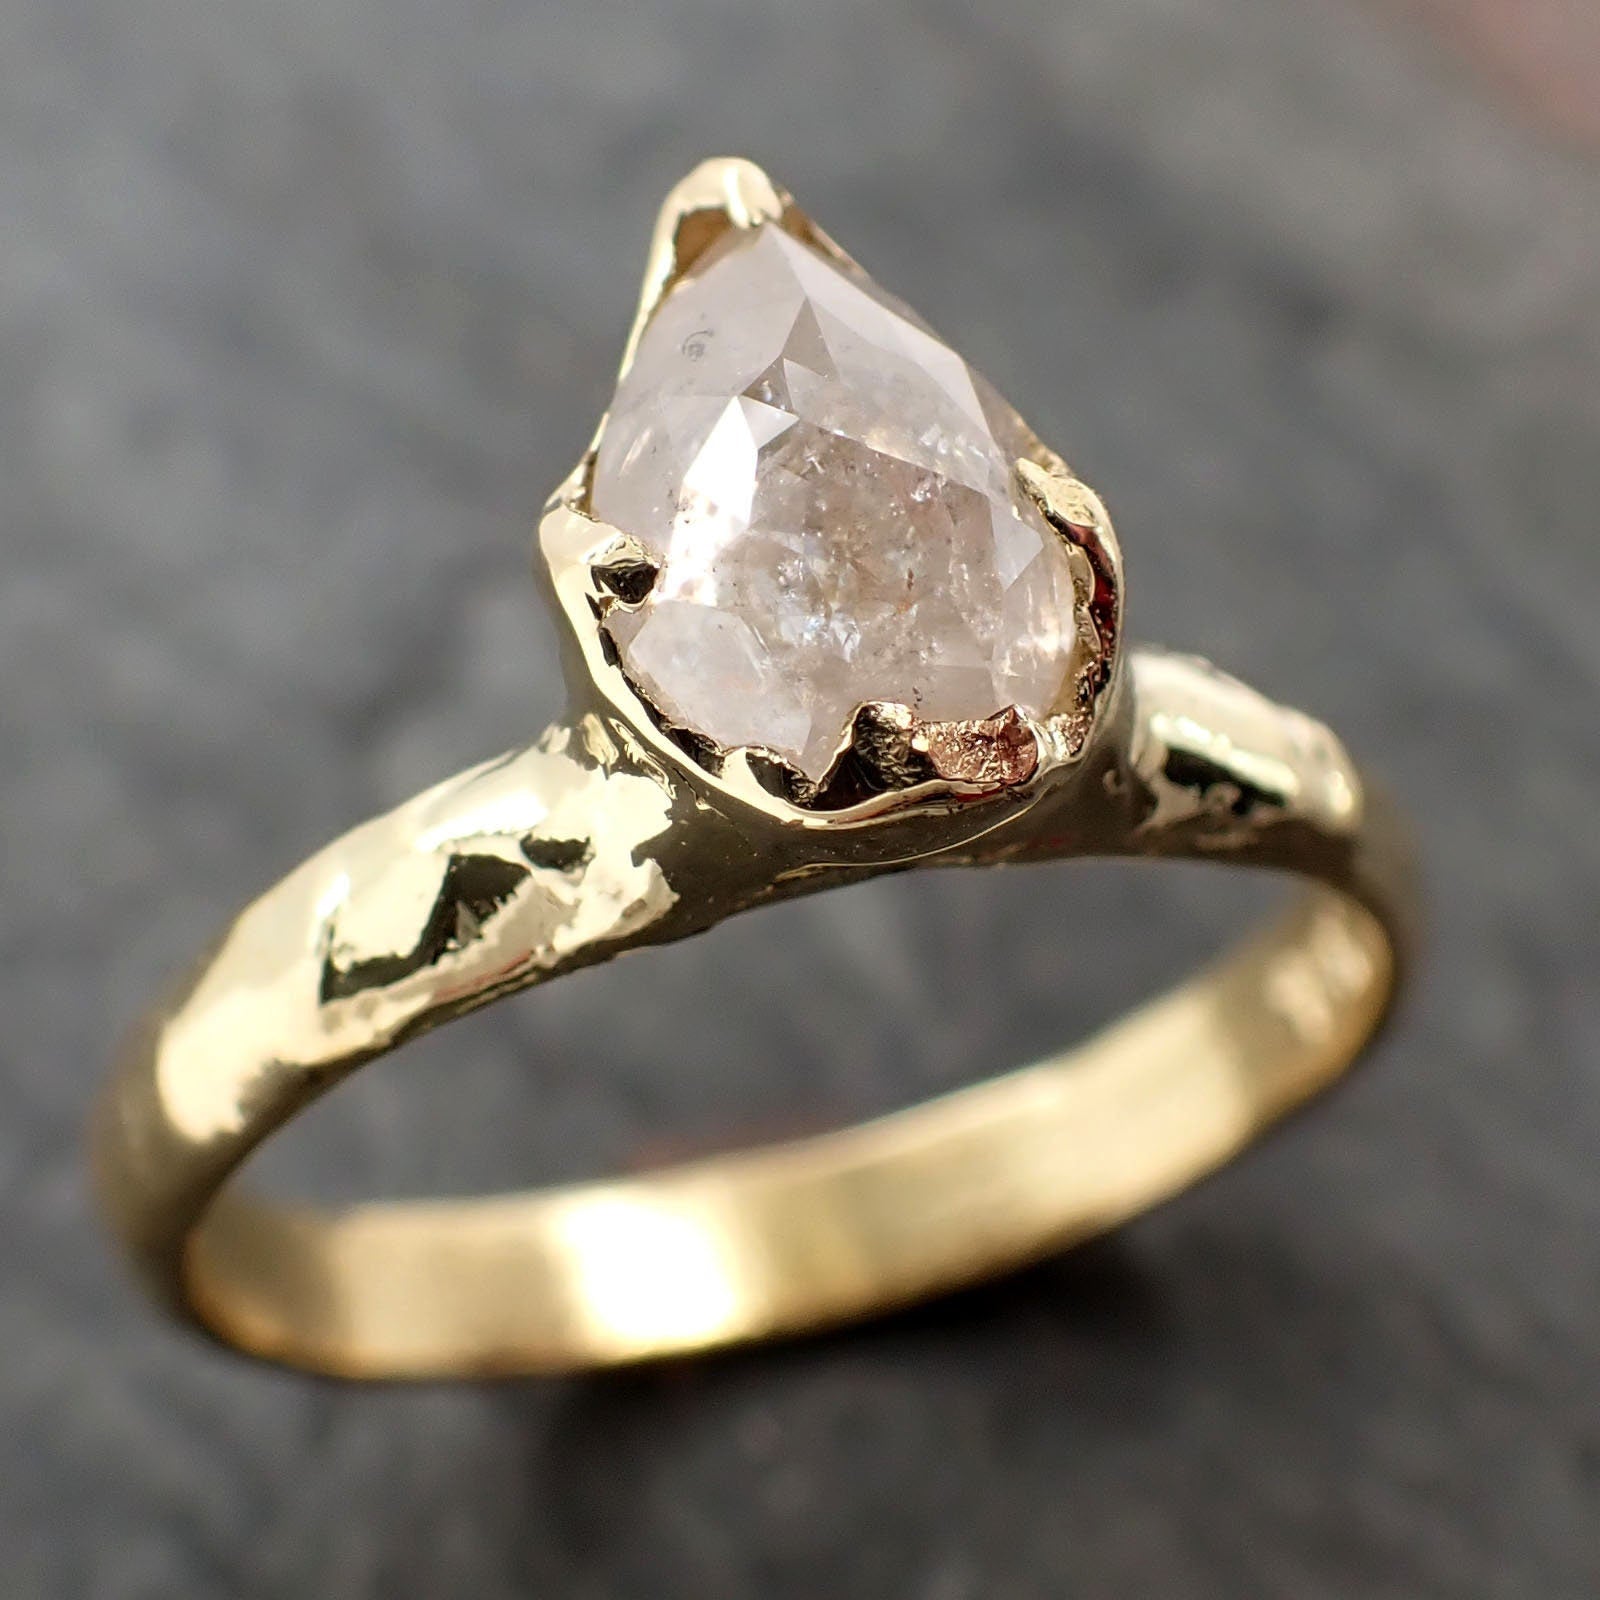 Fancy cut white Diamond Solitaire Engagement 18k yellow Gold Wedding Ring byAngeline 2918